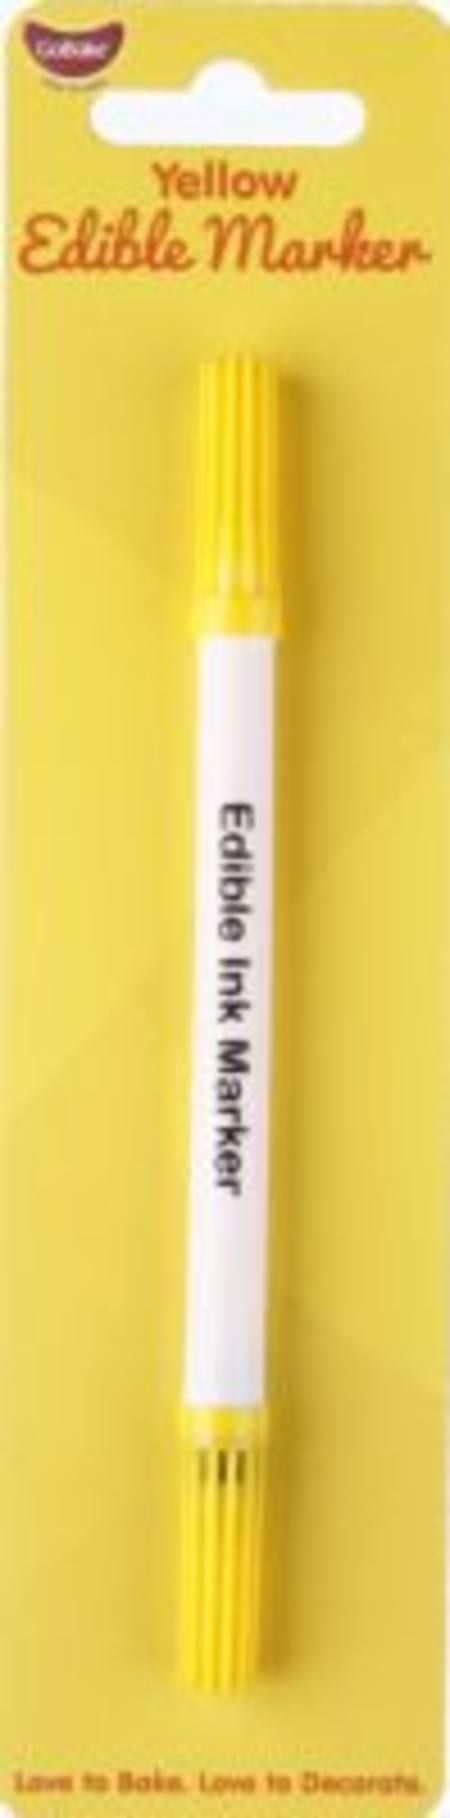 Buy Edible Marker Pen Yellow in NZ. 